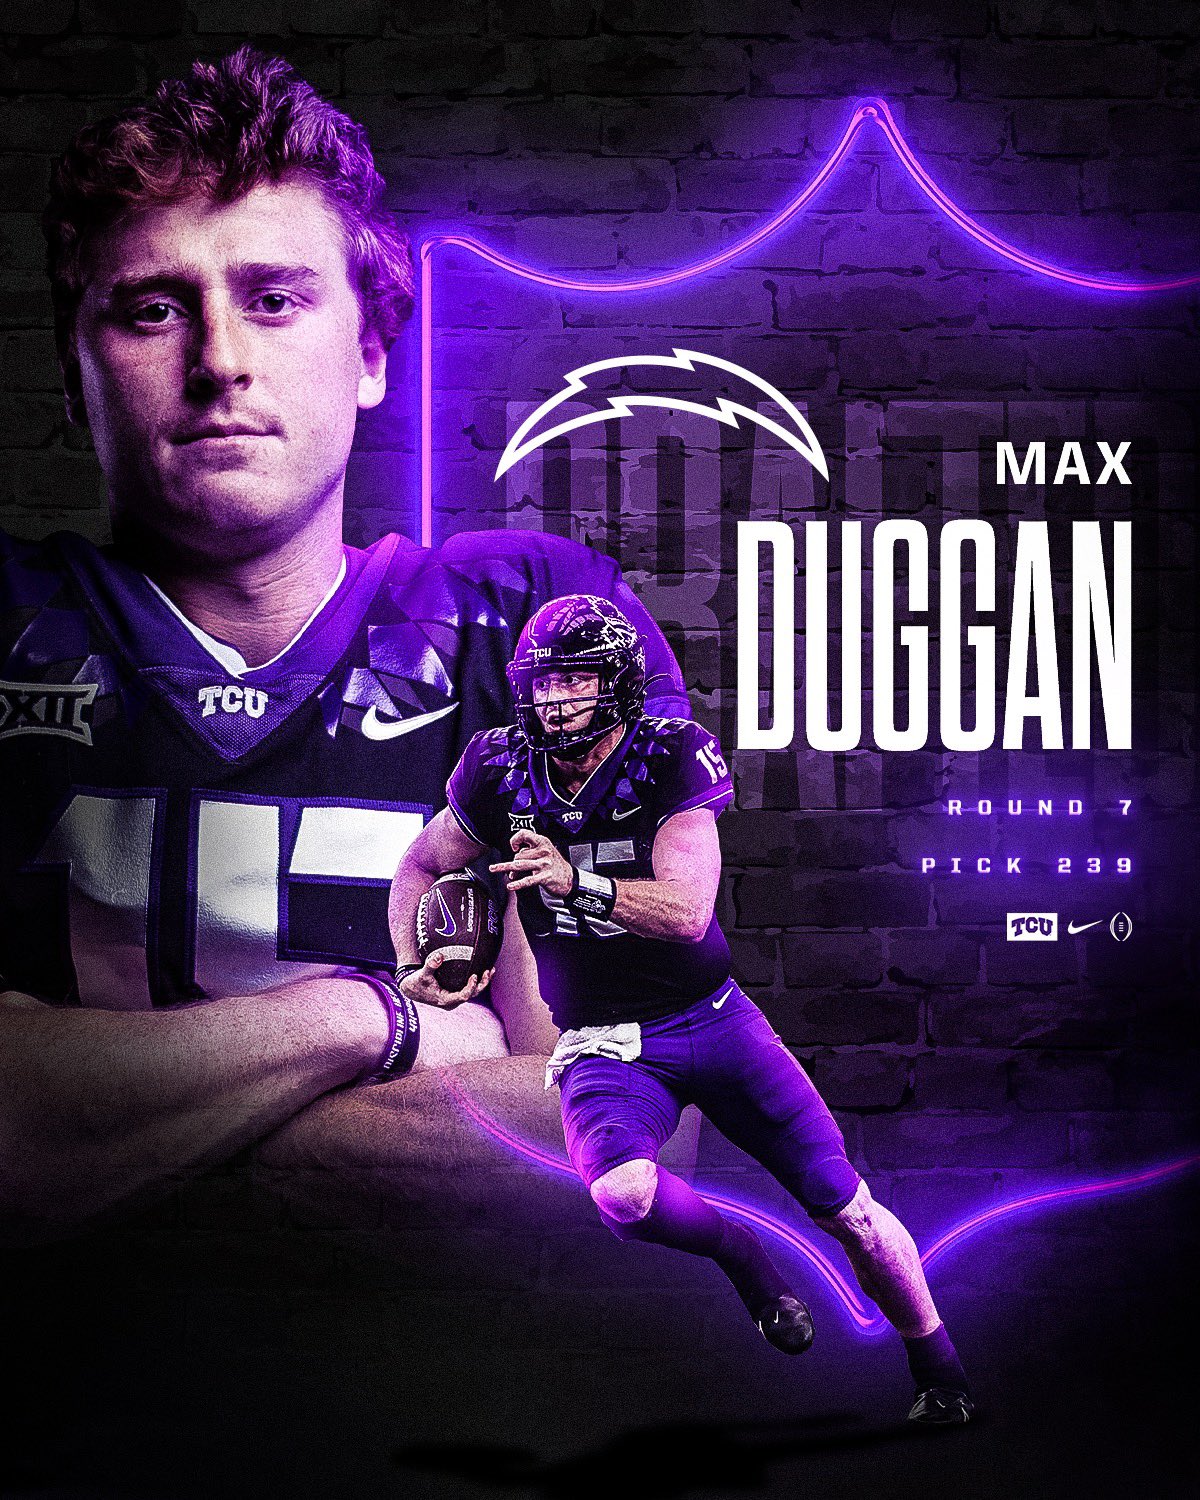 TCU quarterback Max Duggan finalist for Heisman Trophy   tylerpapercom